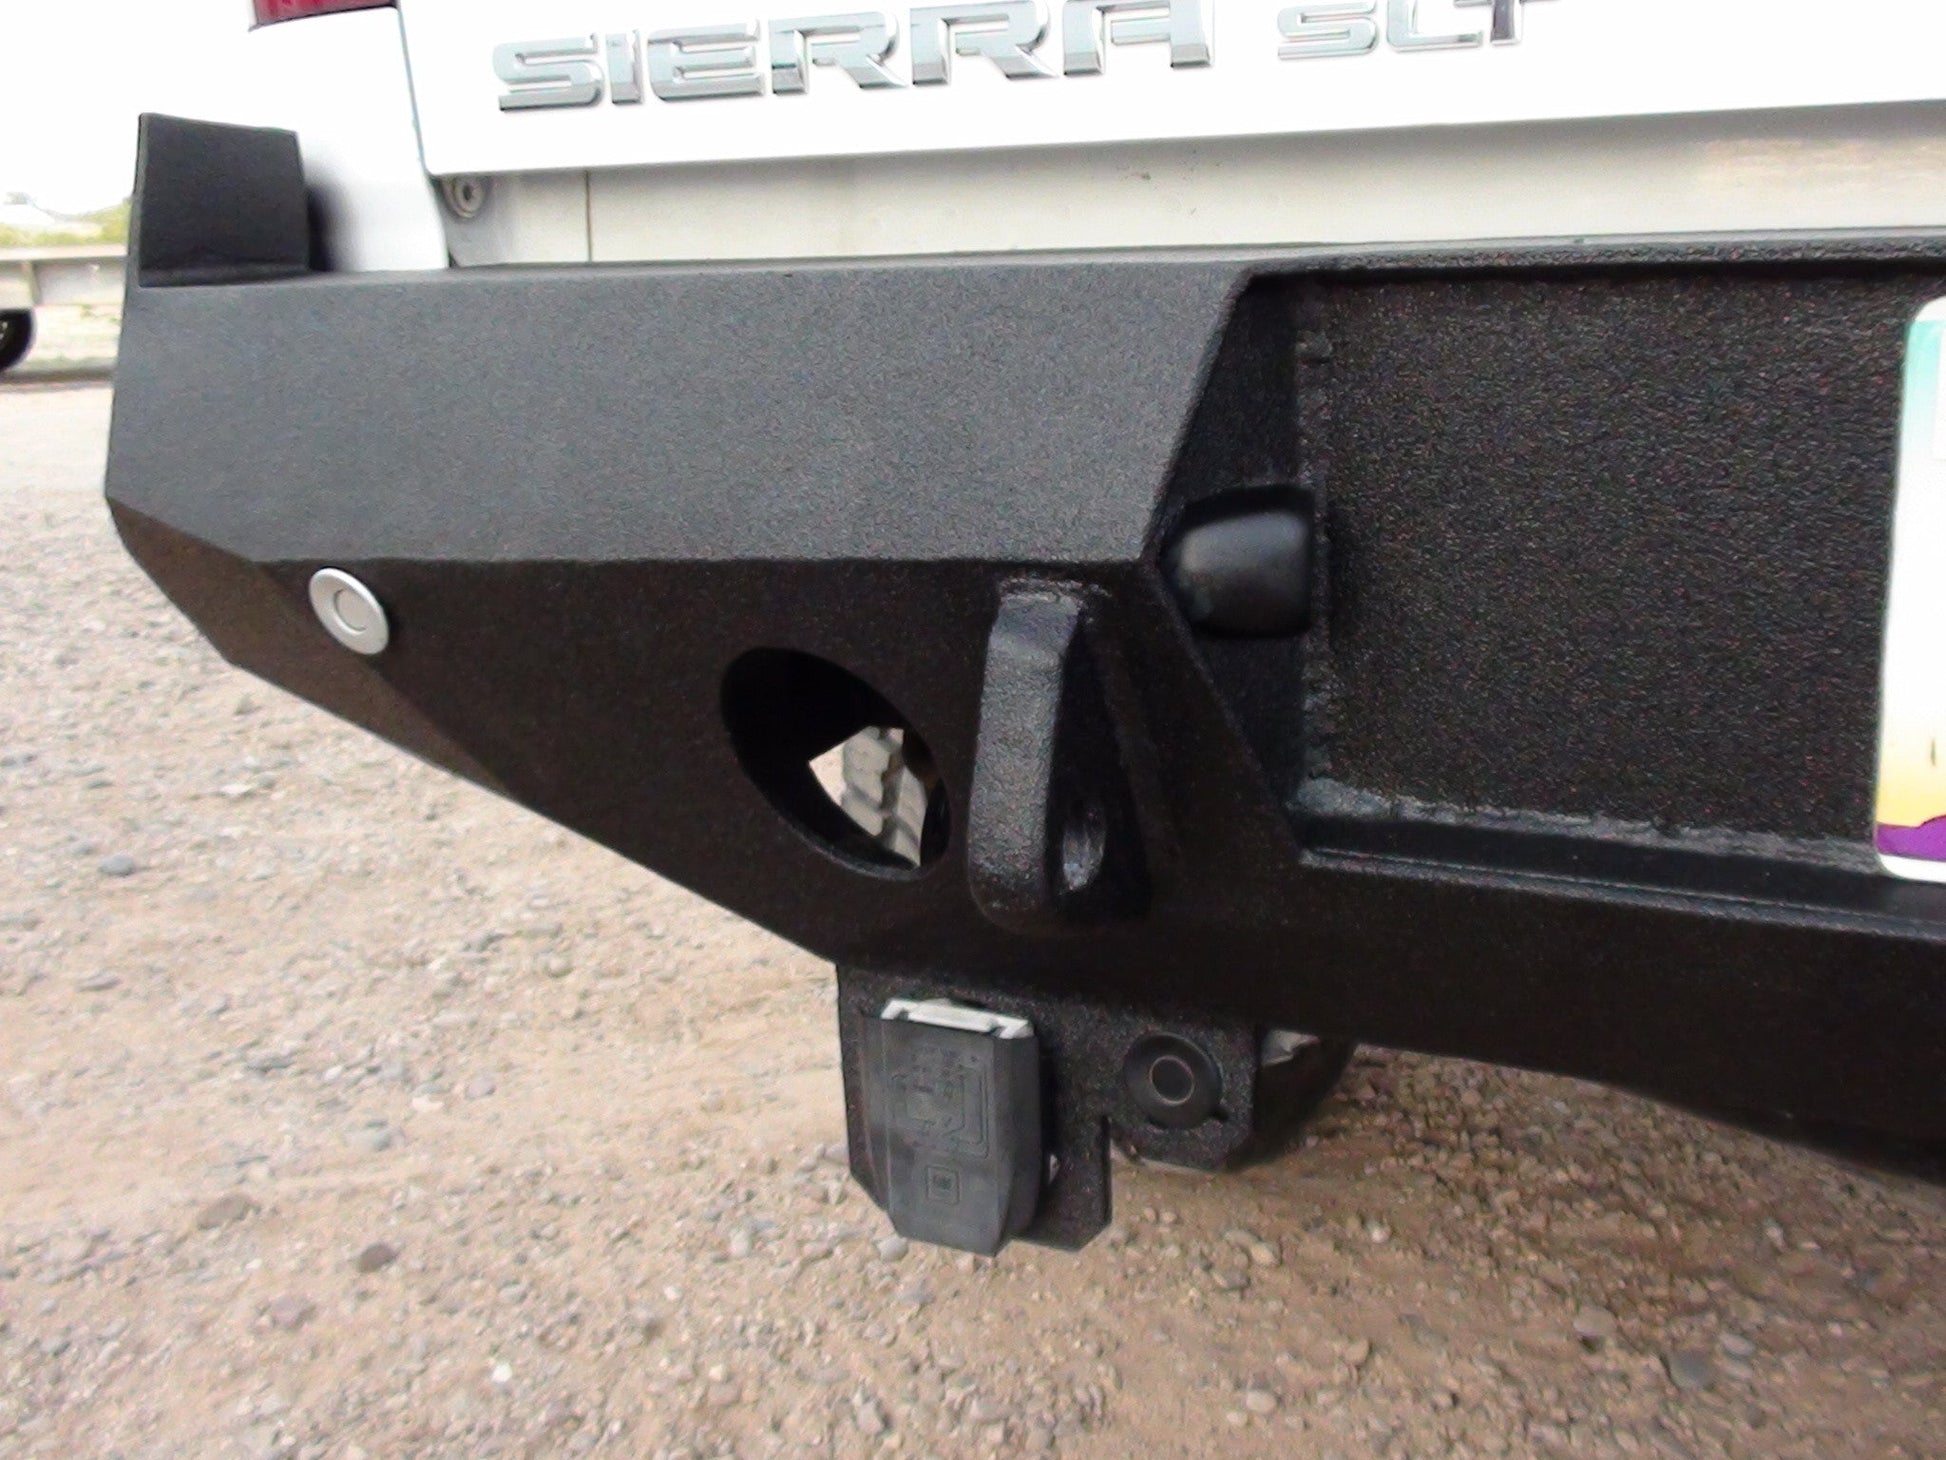 2007-2013 GMC Sierra 1500 Rear Bumper | Parking Sensor Cutouts Available - Iron Bull BumpersREAR IRON BUMPER